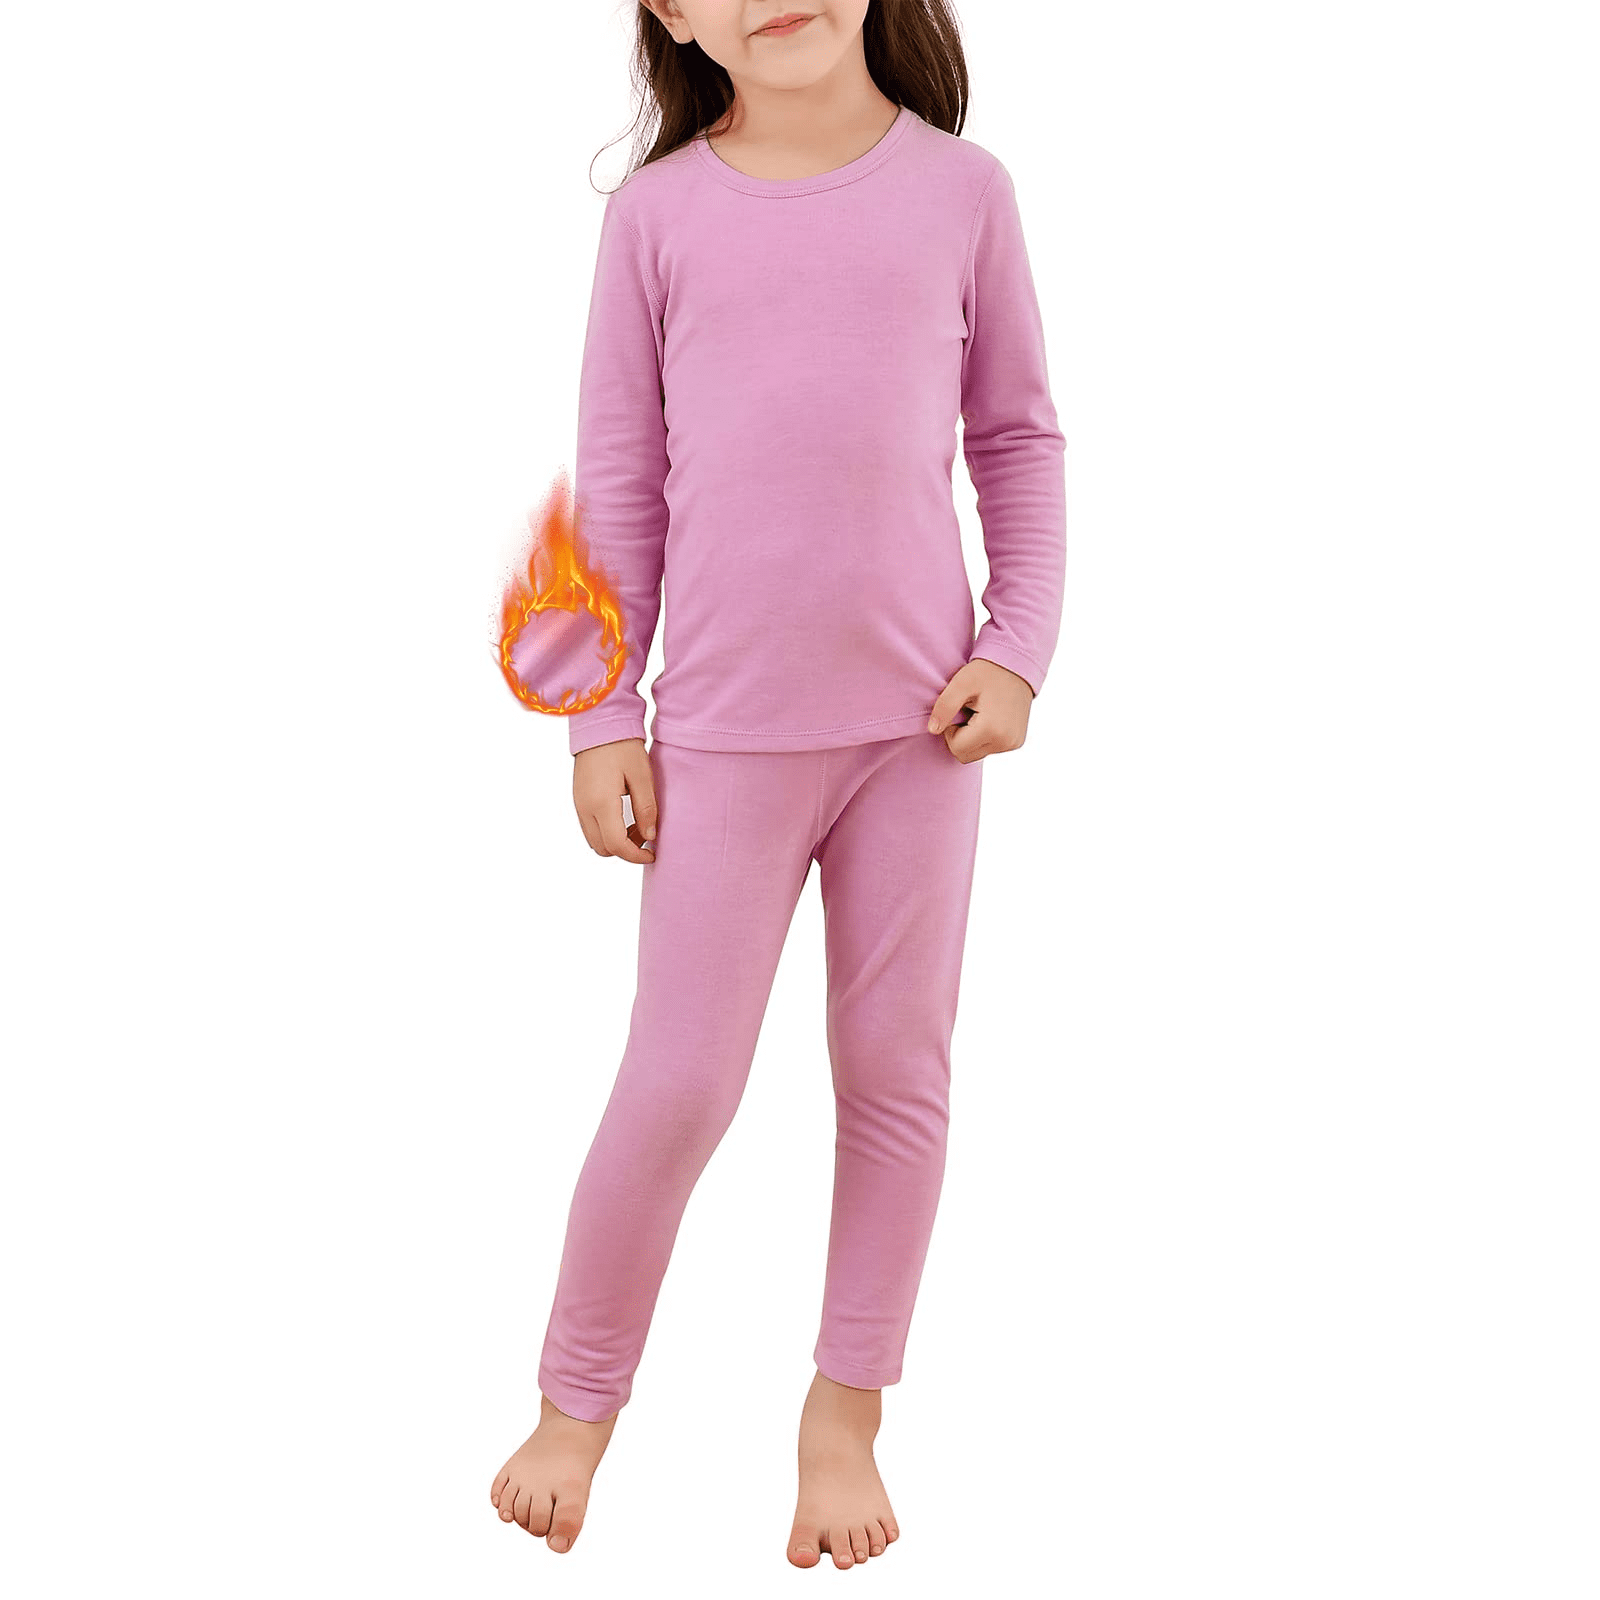 Zando Toddler Thermal Set for Girls Boys Soft Toddler Thermal Underwear  Winter Toddler Long Johns Warm Baby Girl Leggings & Shirts Pink 90 